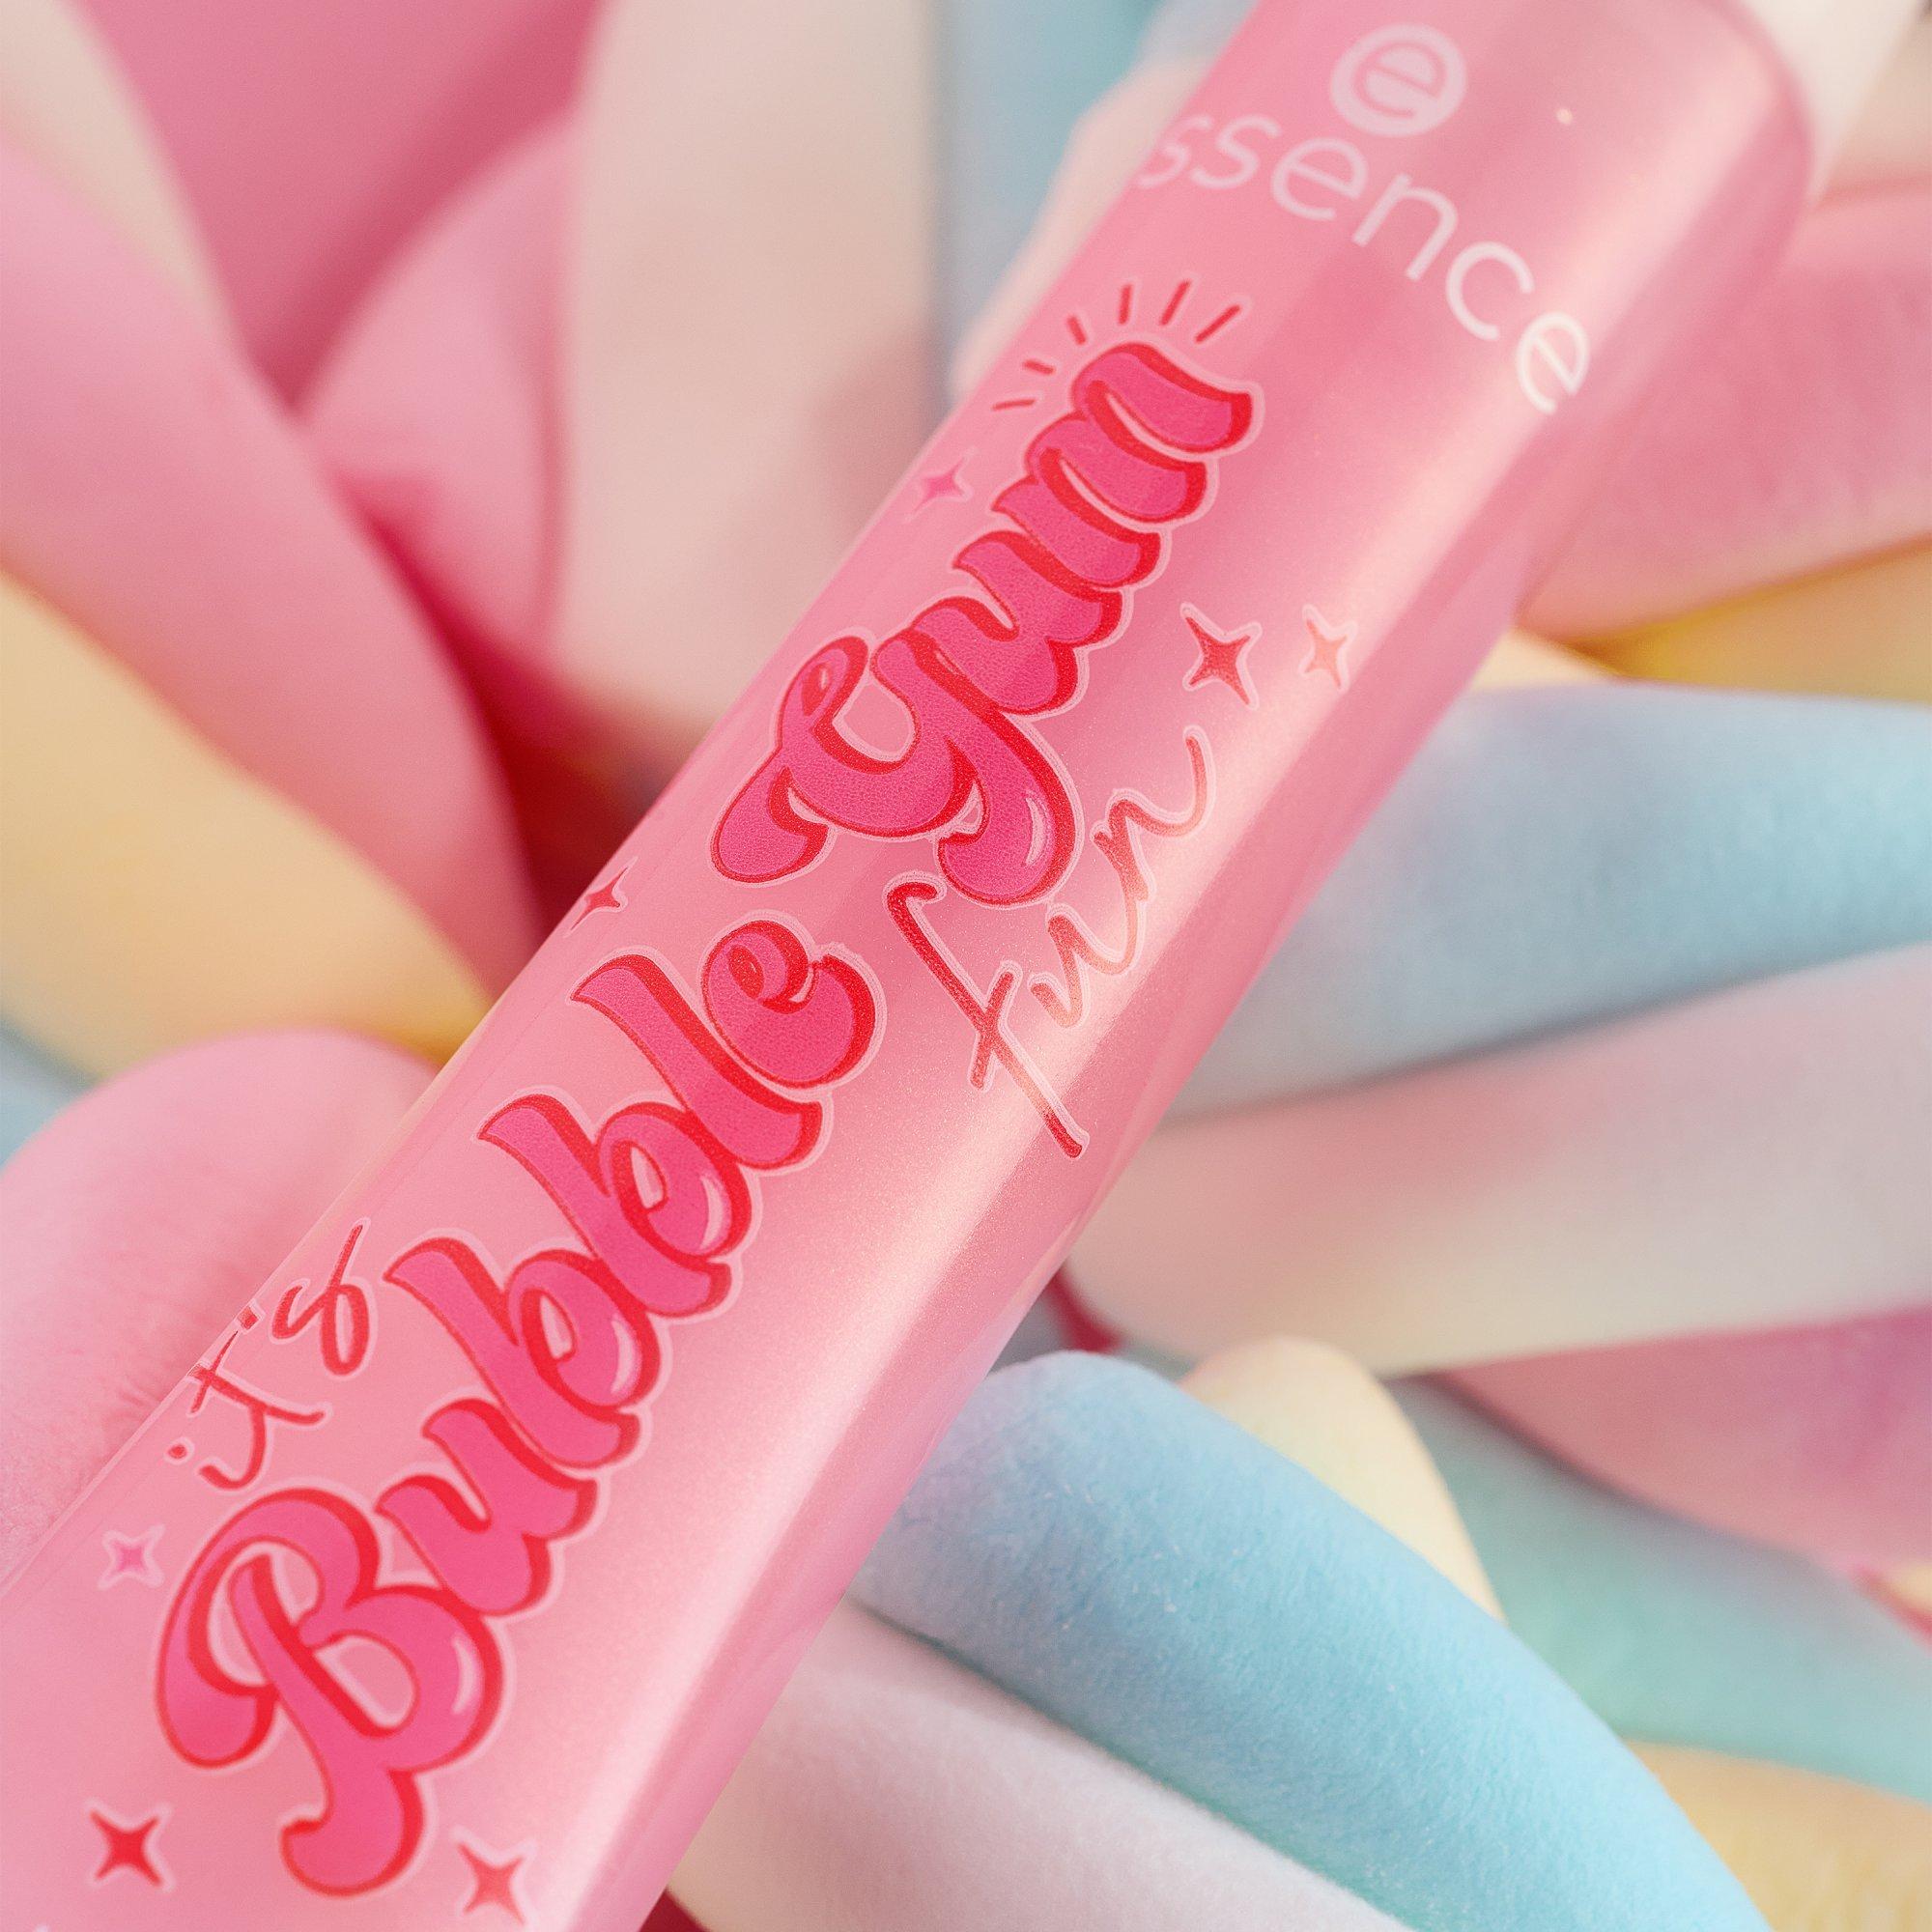 it’s Bubble Gum Fun shiny lipgloss